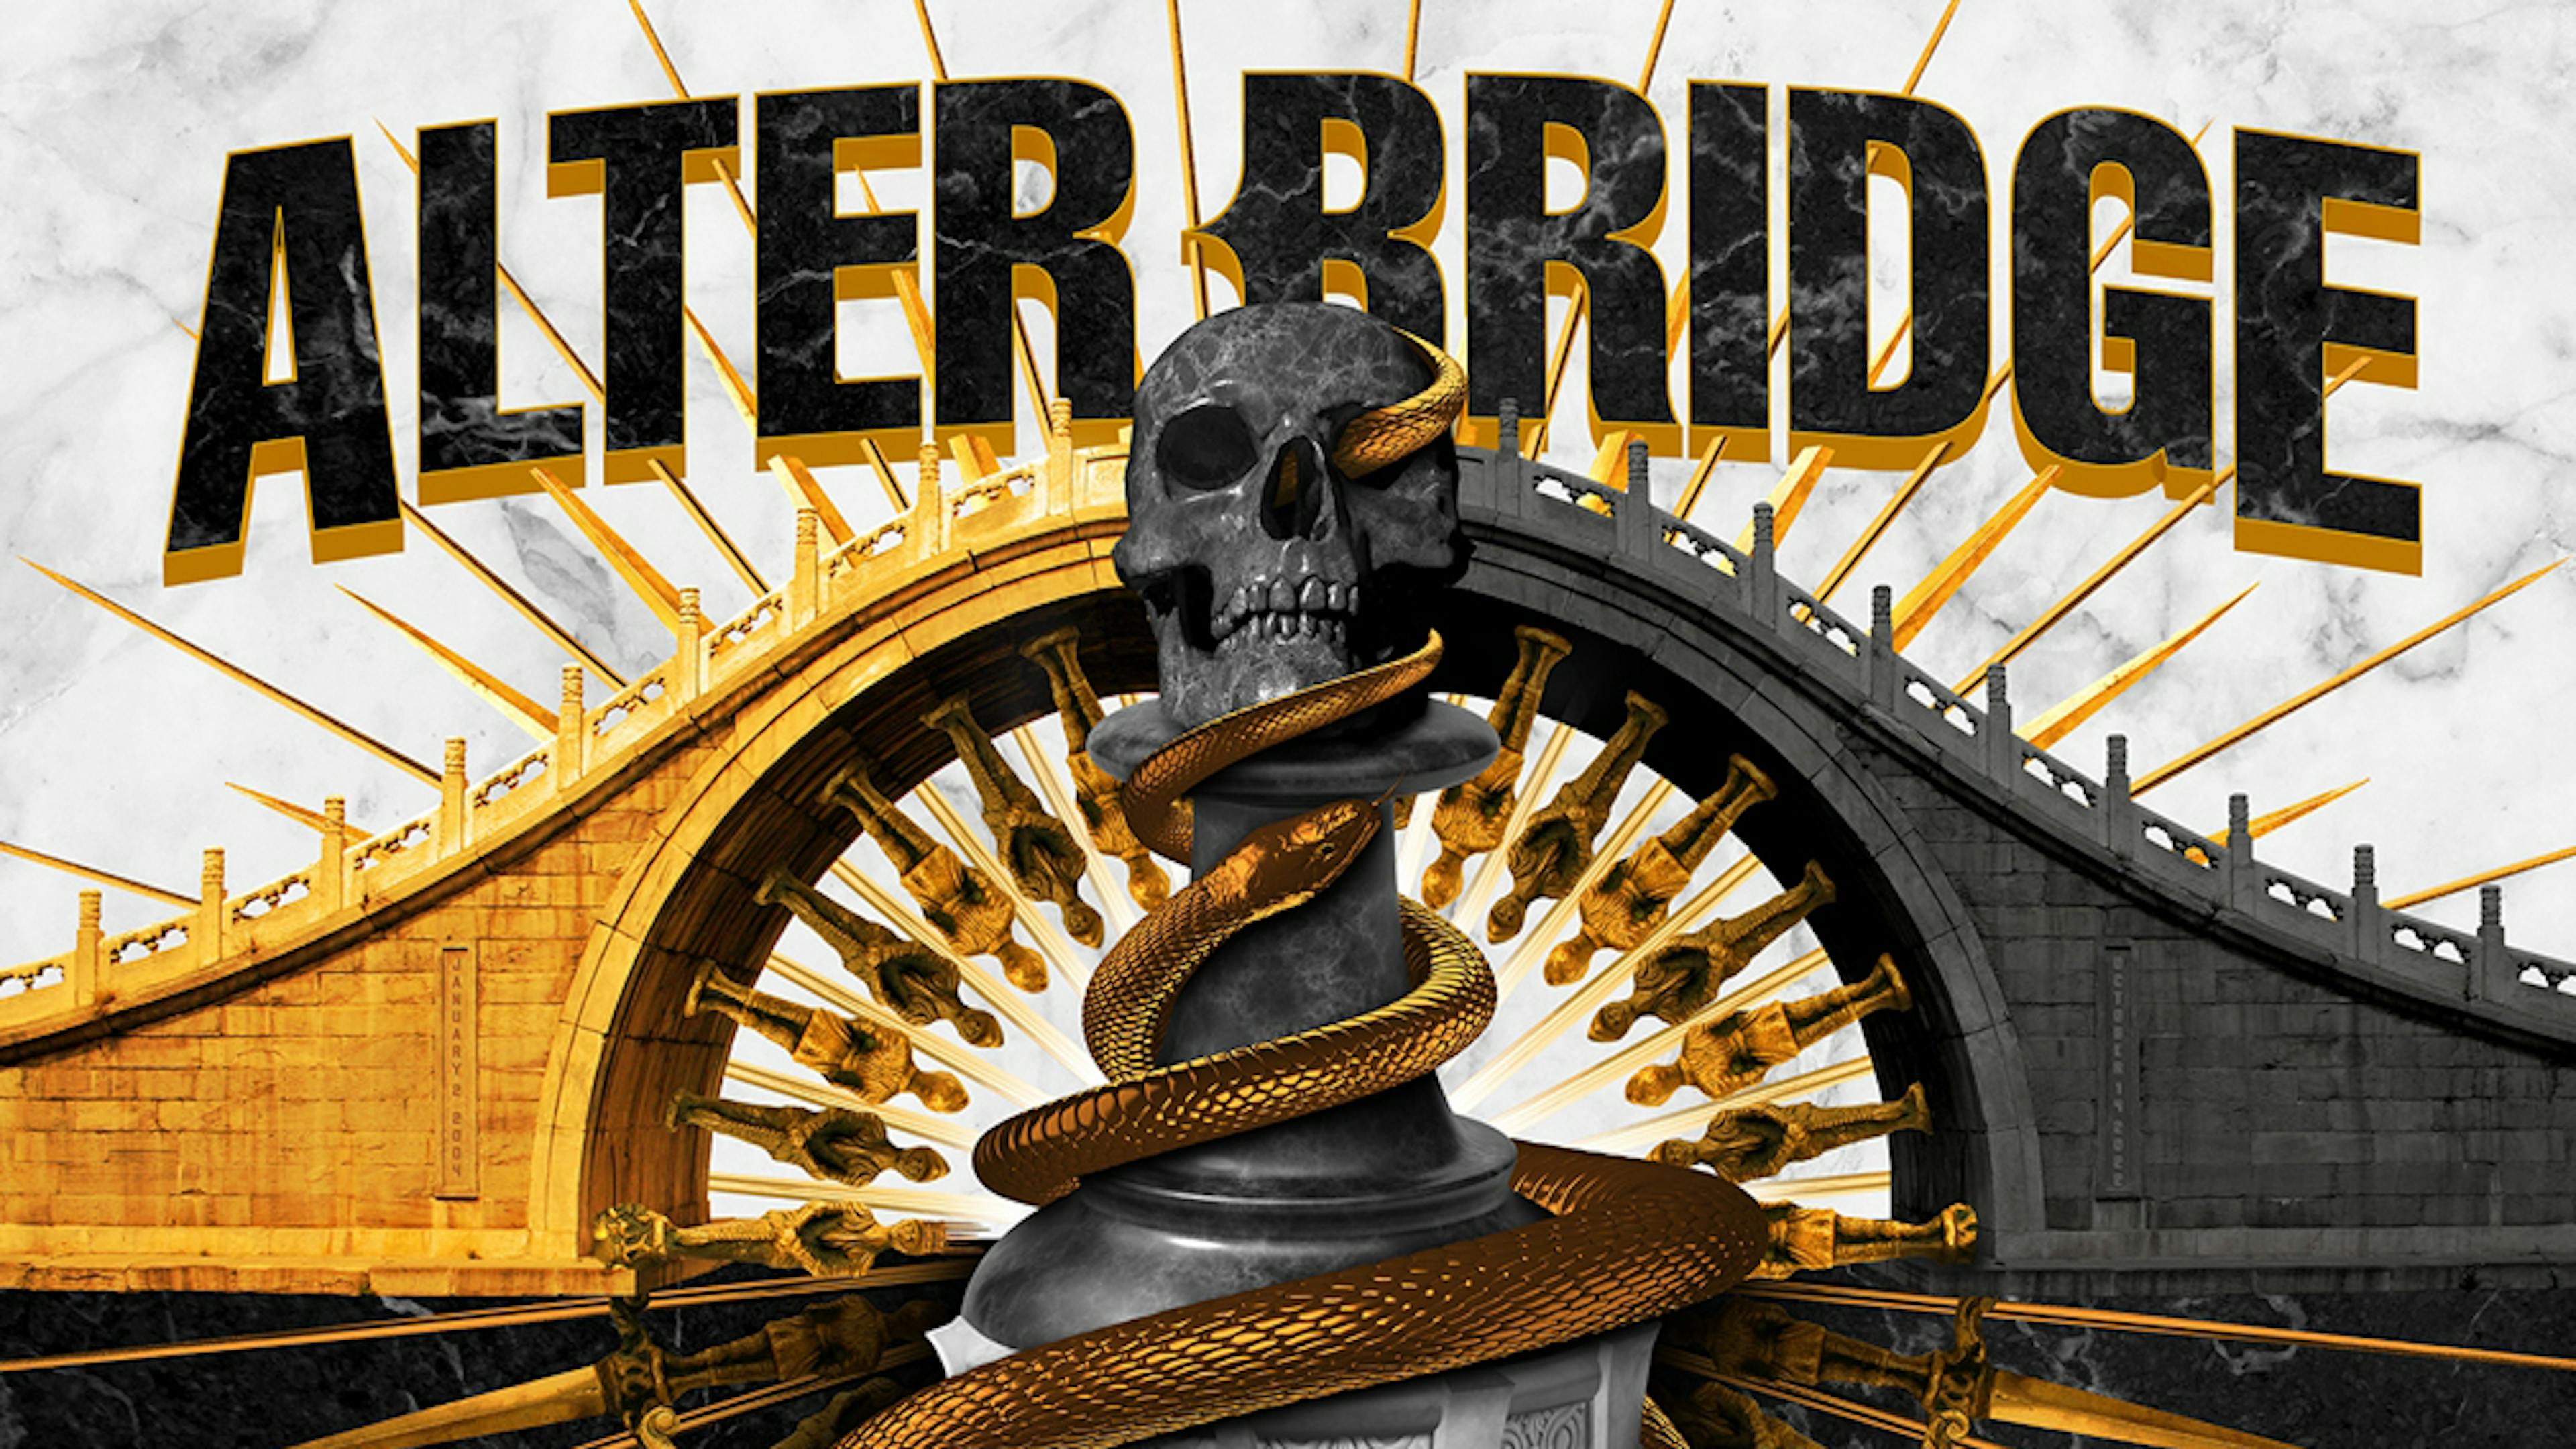 Alter Bridge - Pawns & Kings Lyrics and Tracklist